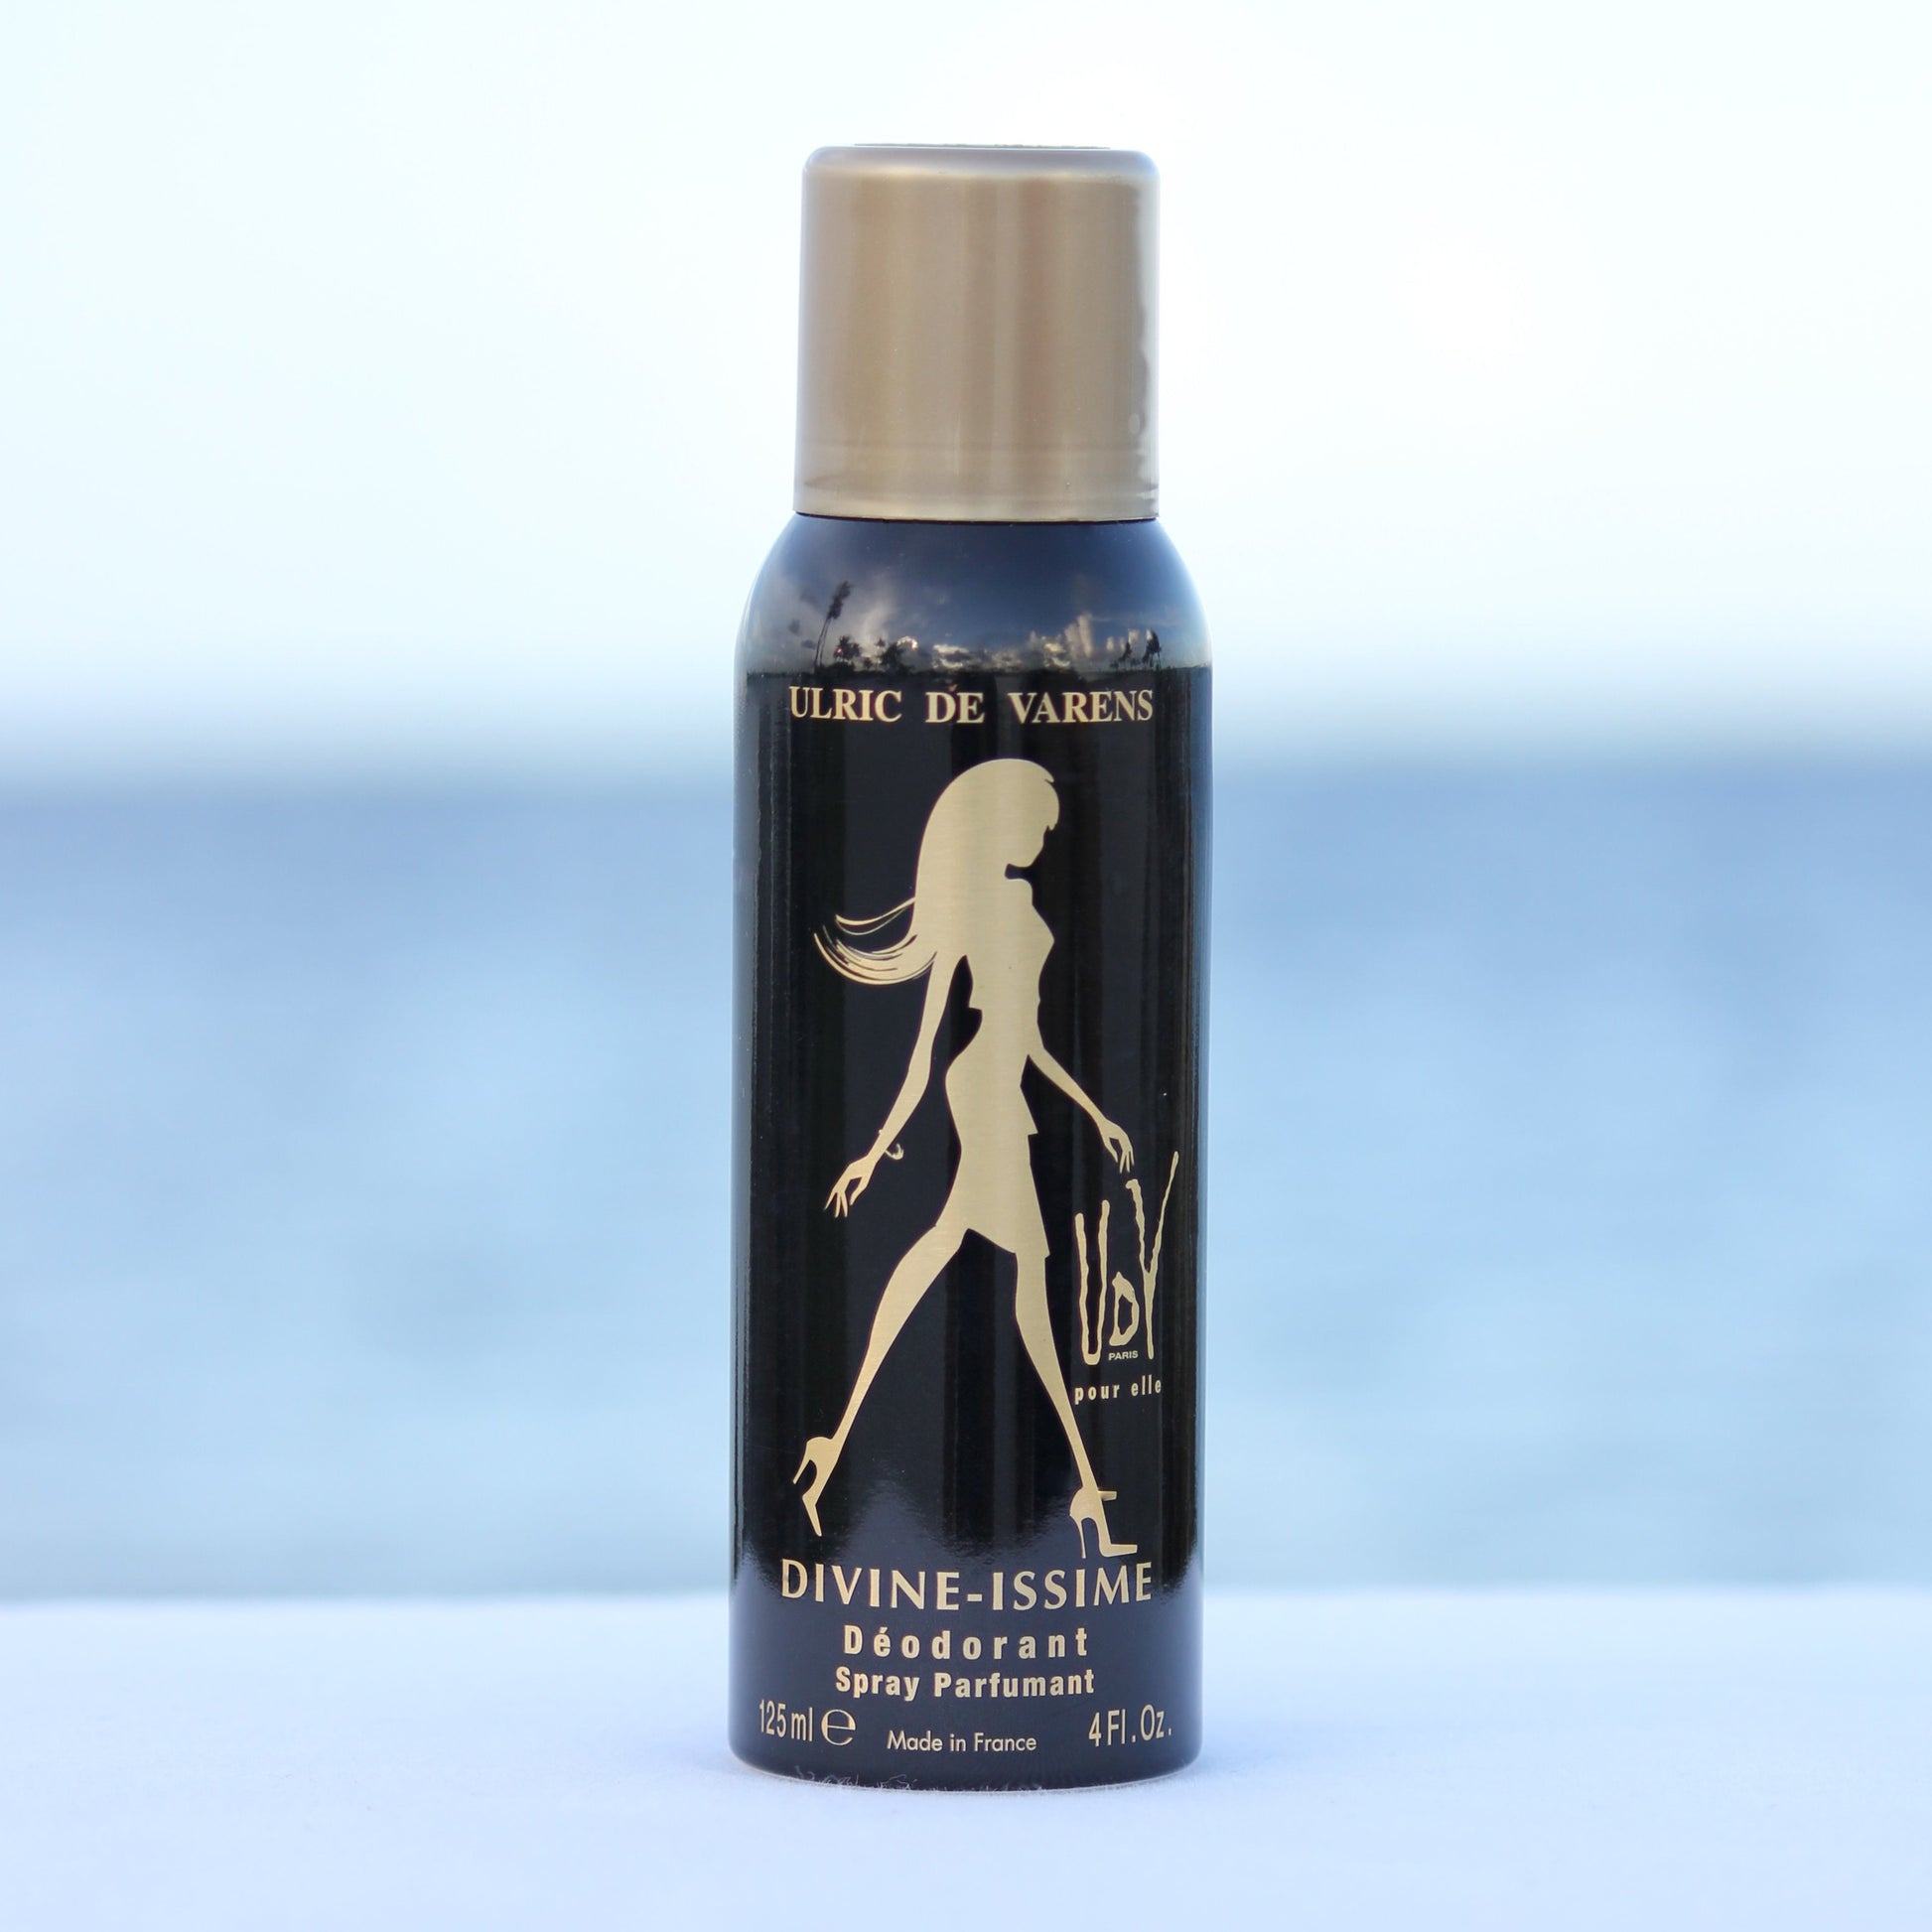 Ulric De Varens Divine-issime women's perfume scented deodorant 4 oz in front of beach